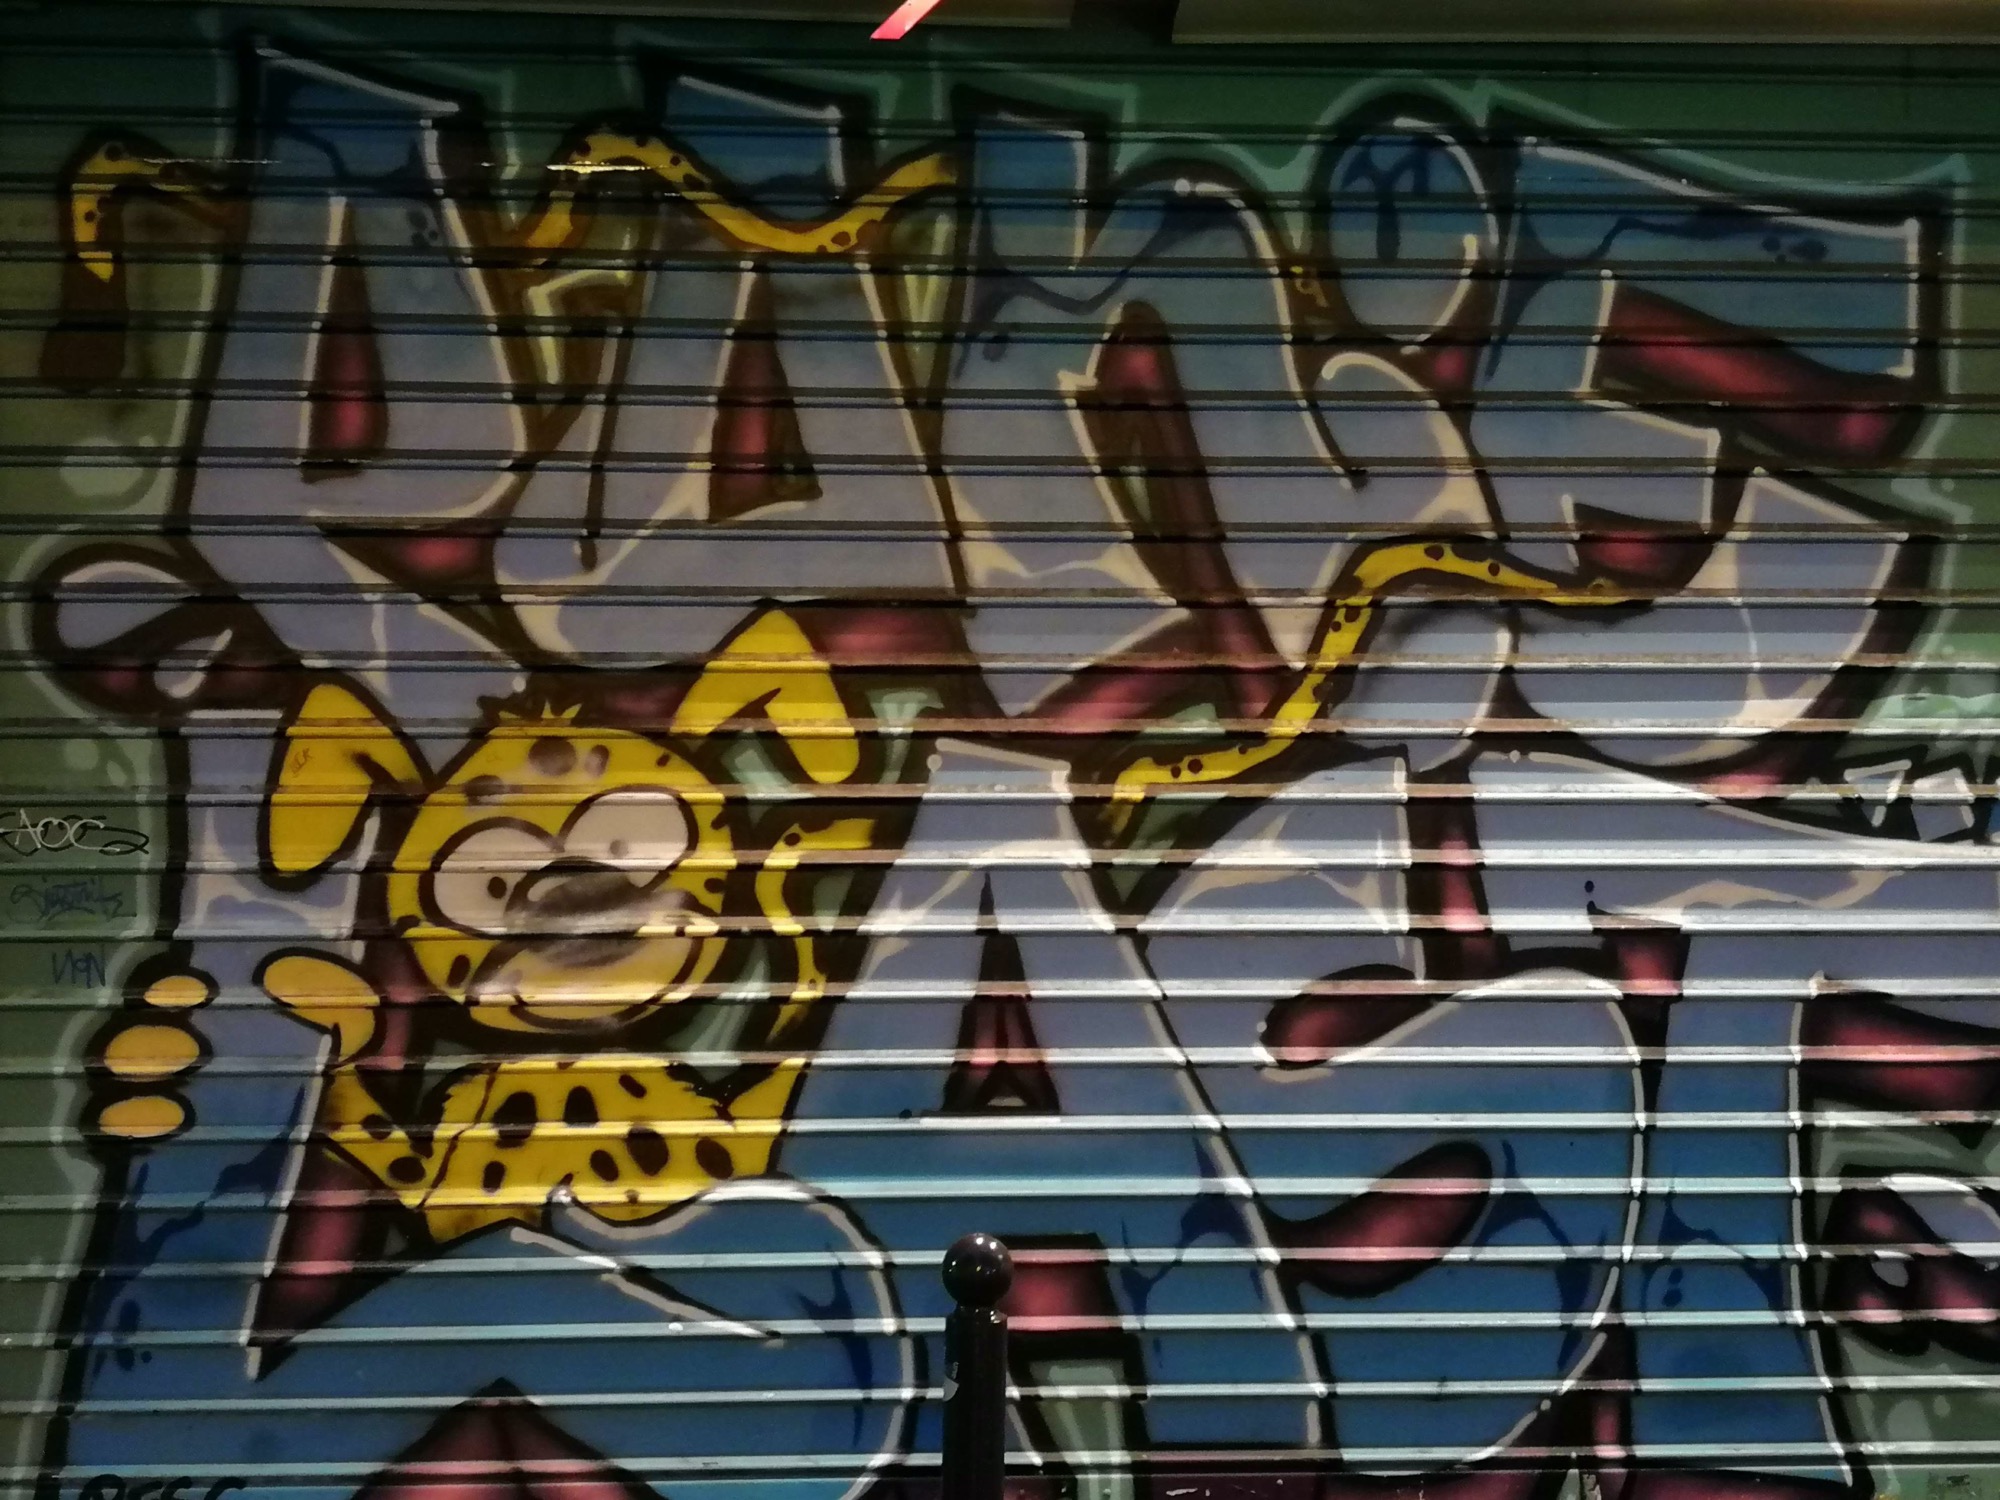 Graffiti 659 Marsupilami captured by Rabot in Paris France